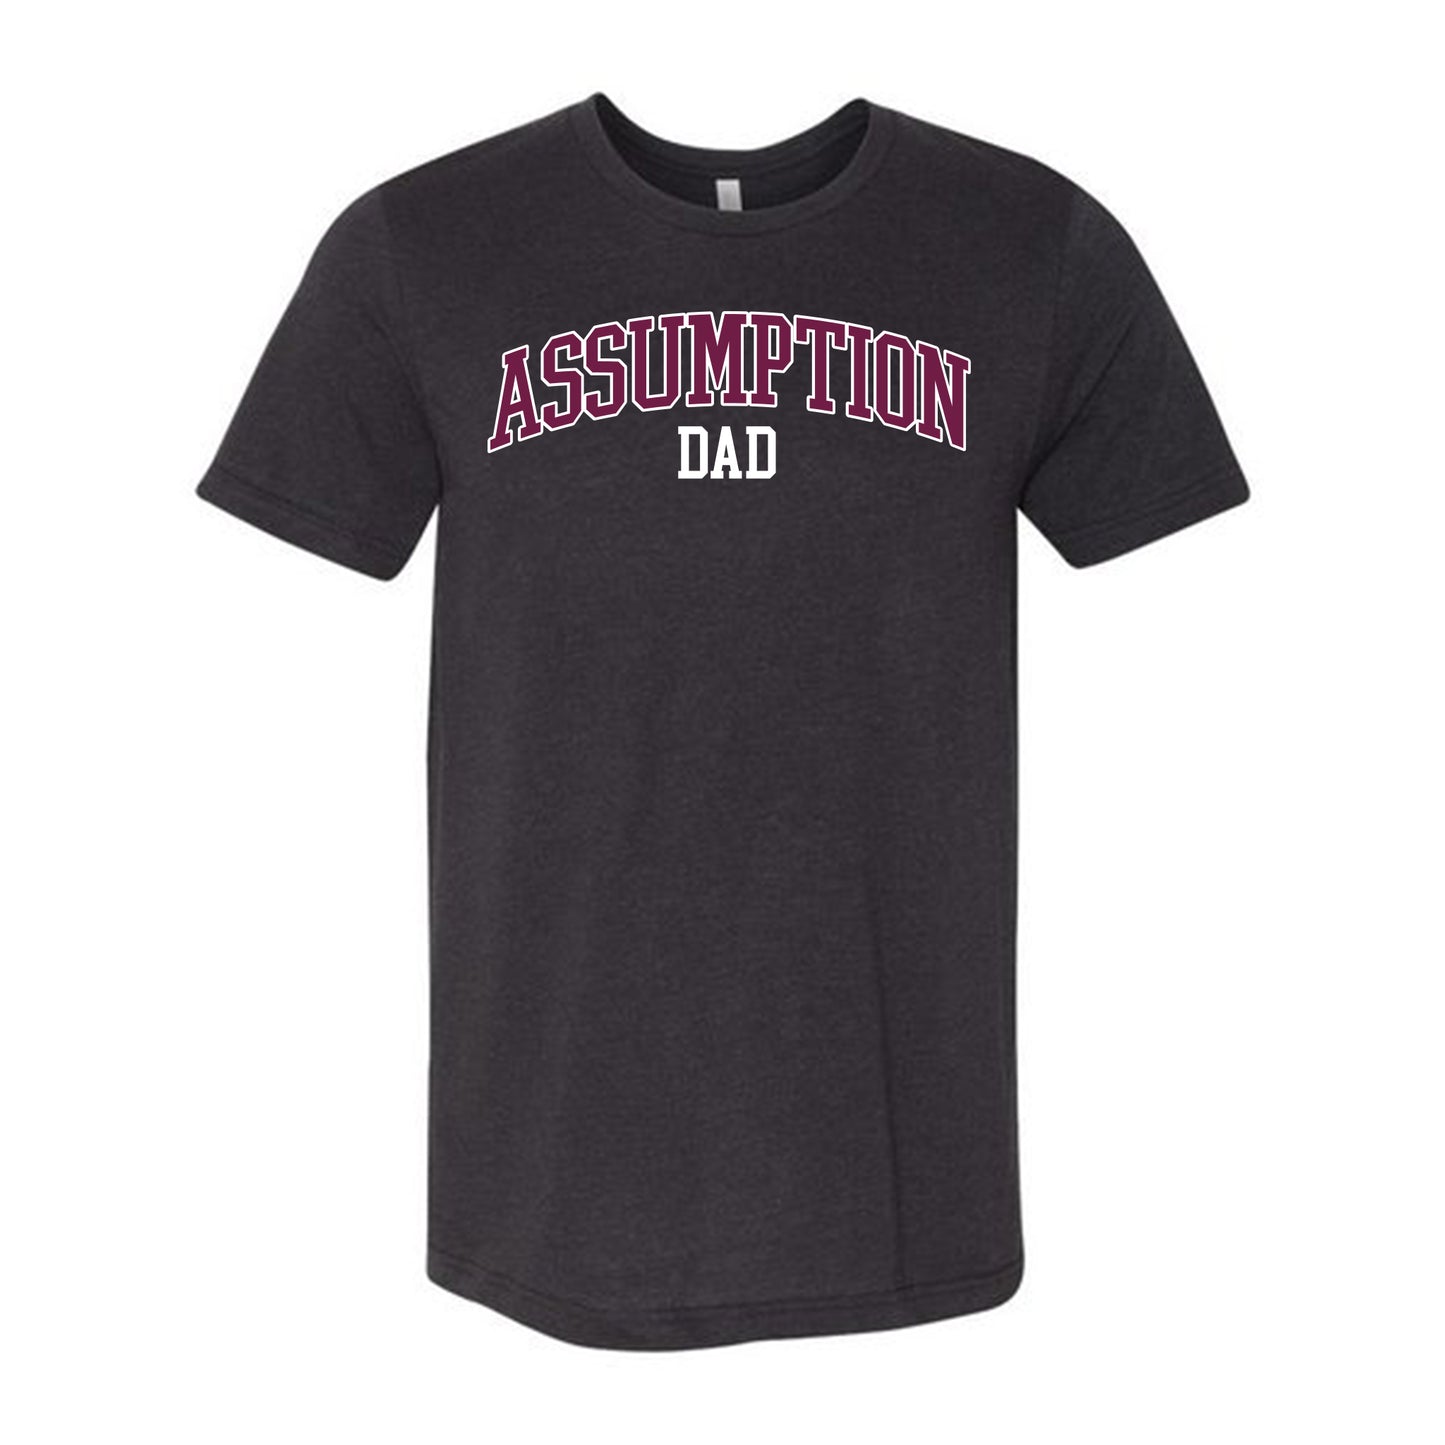 T-Shirt - Black - Assumption Dad